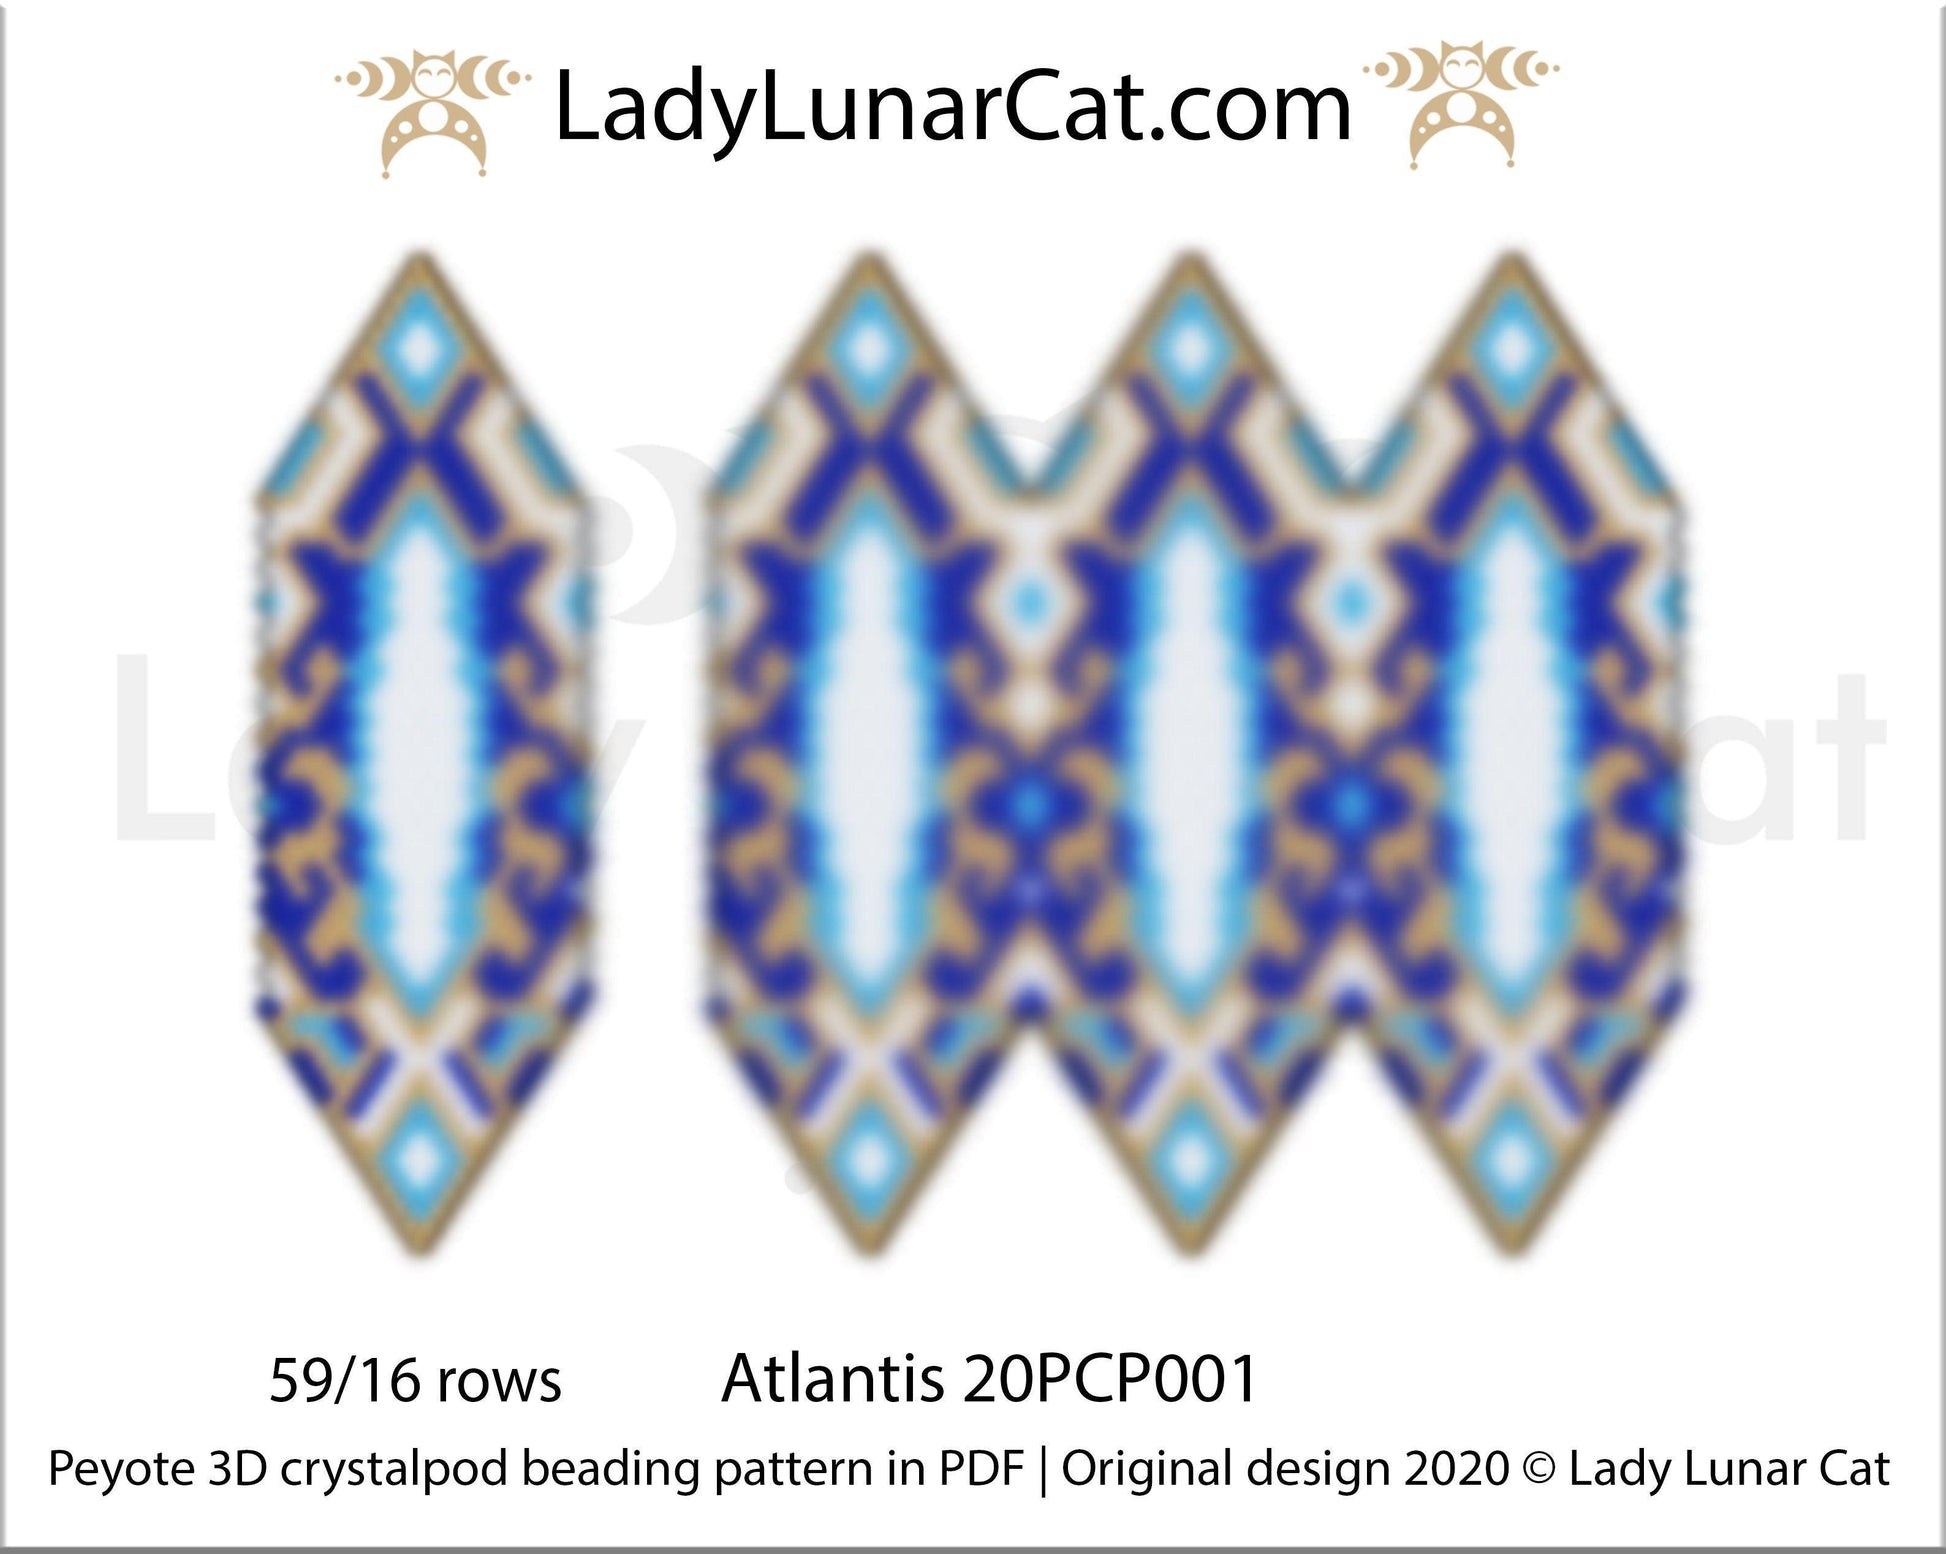 3d peyote pod pattern or crystalpod pattern for beading Atlantis 20PCP001 LadyLunarCat